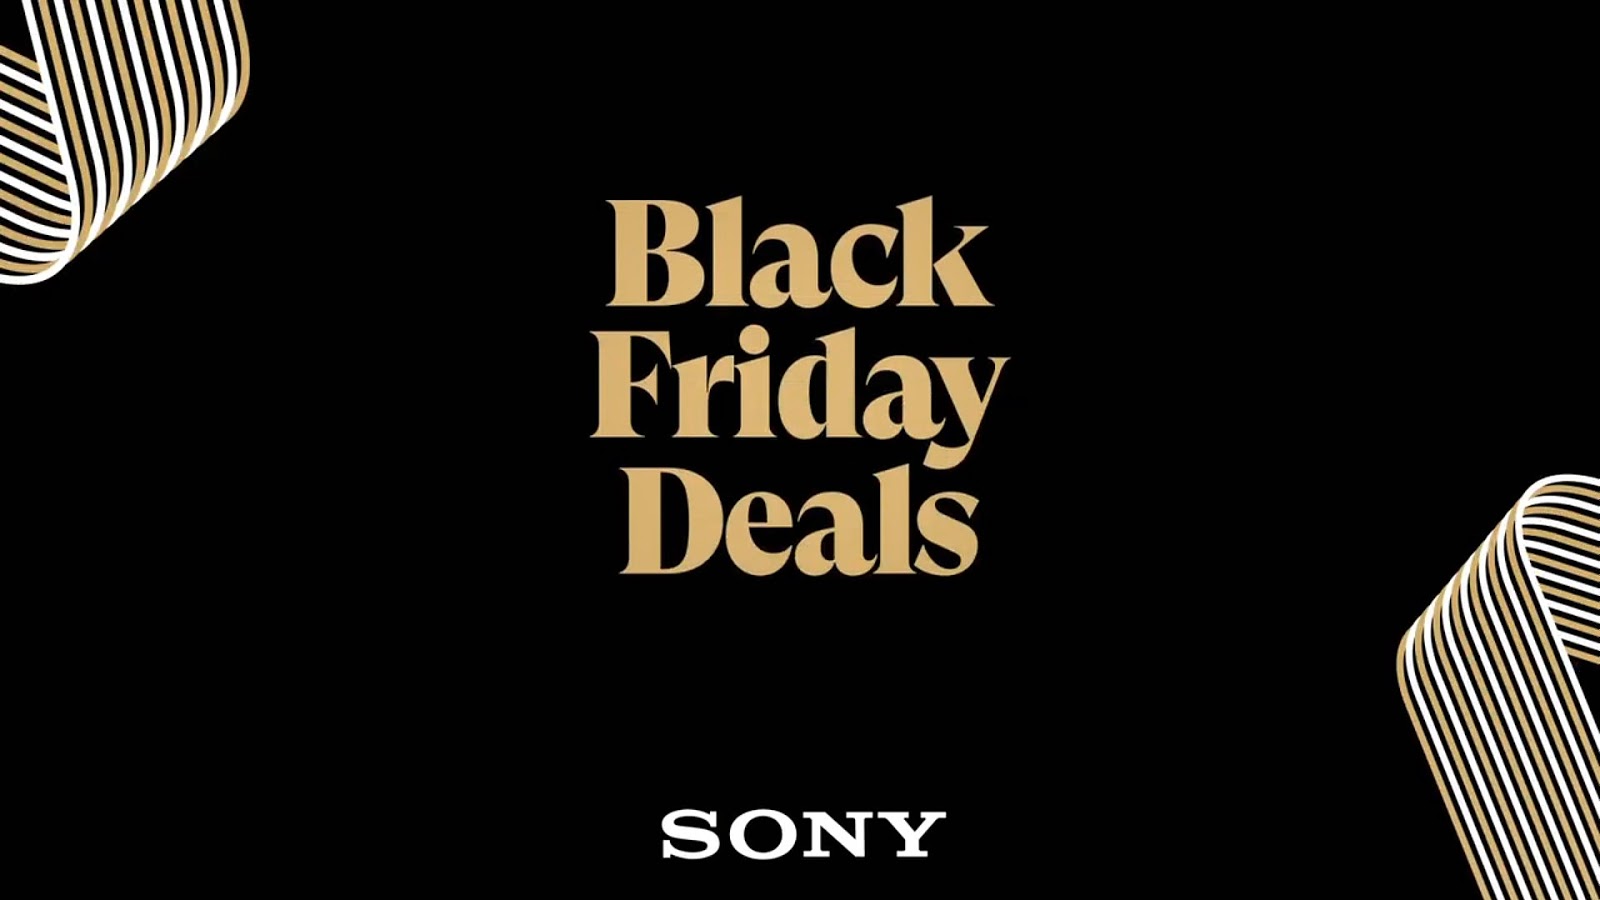 Sony Black Friday Deals - The Walkman Blog